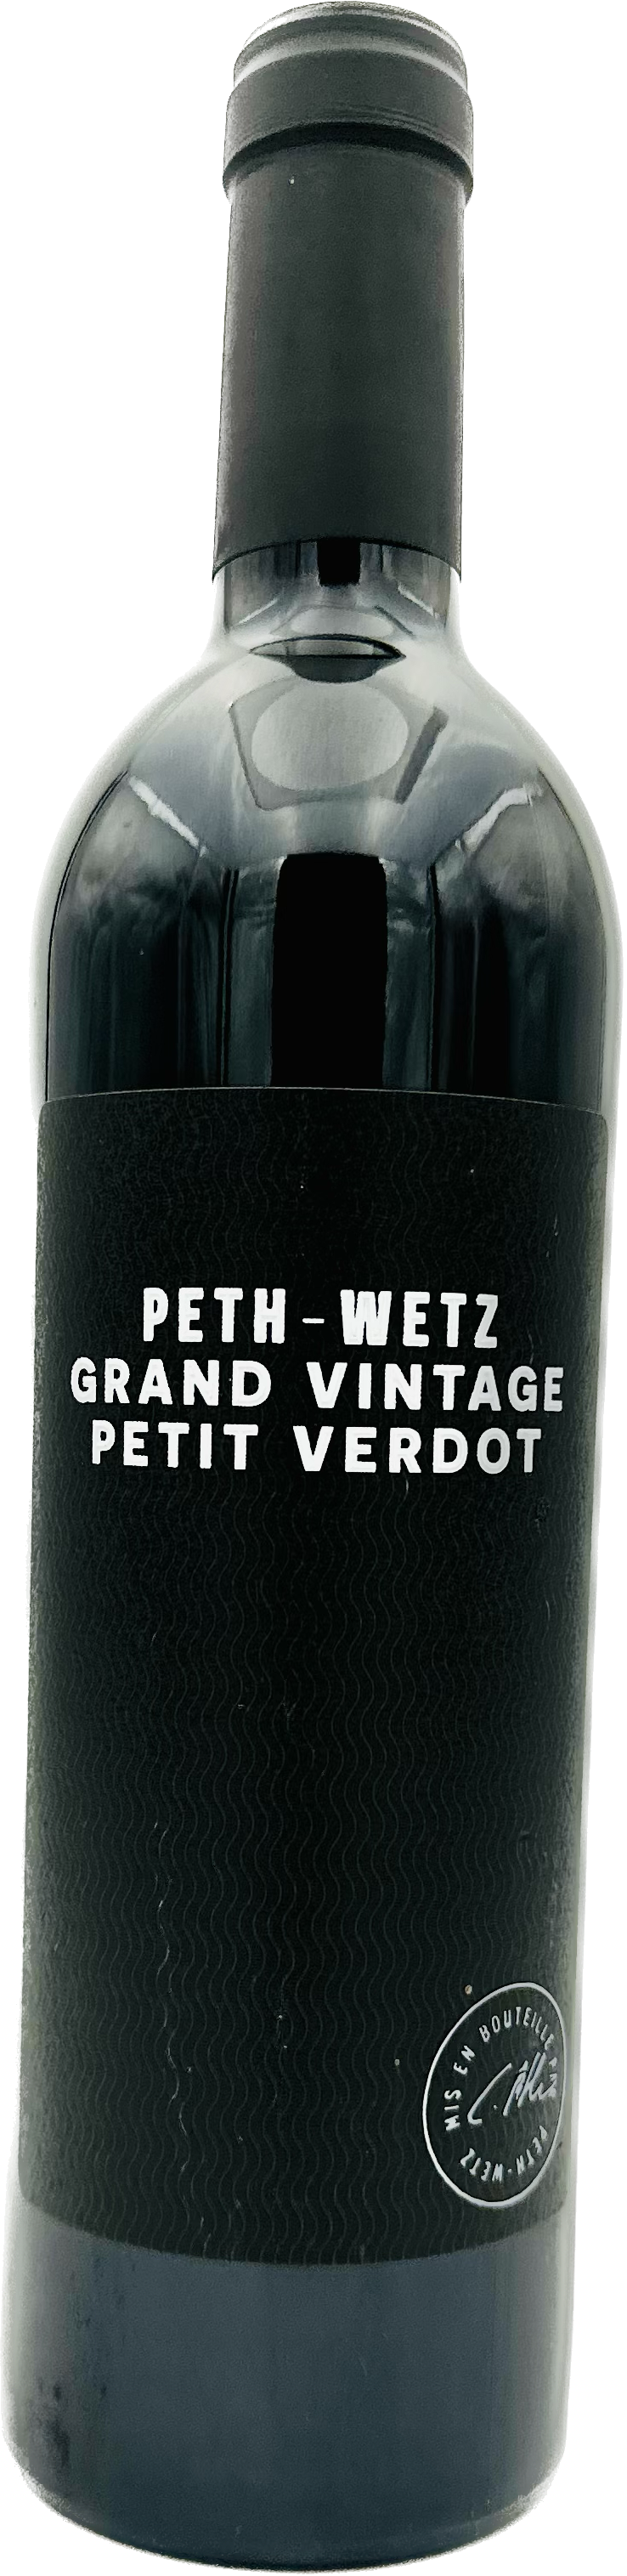 Peth-Wetz Petit Verdot Grand Vintage 2018